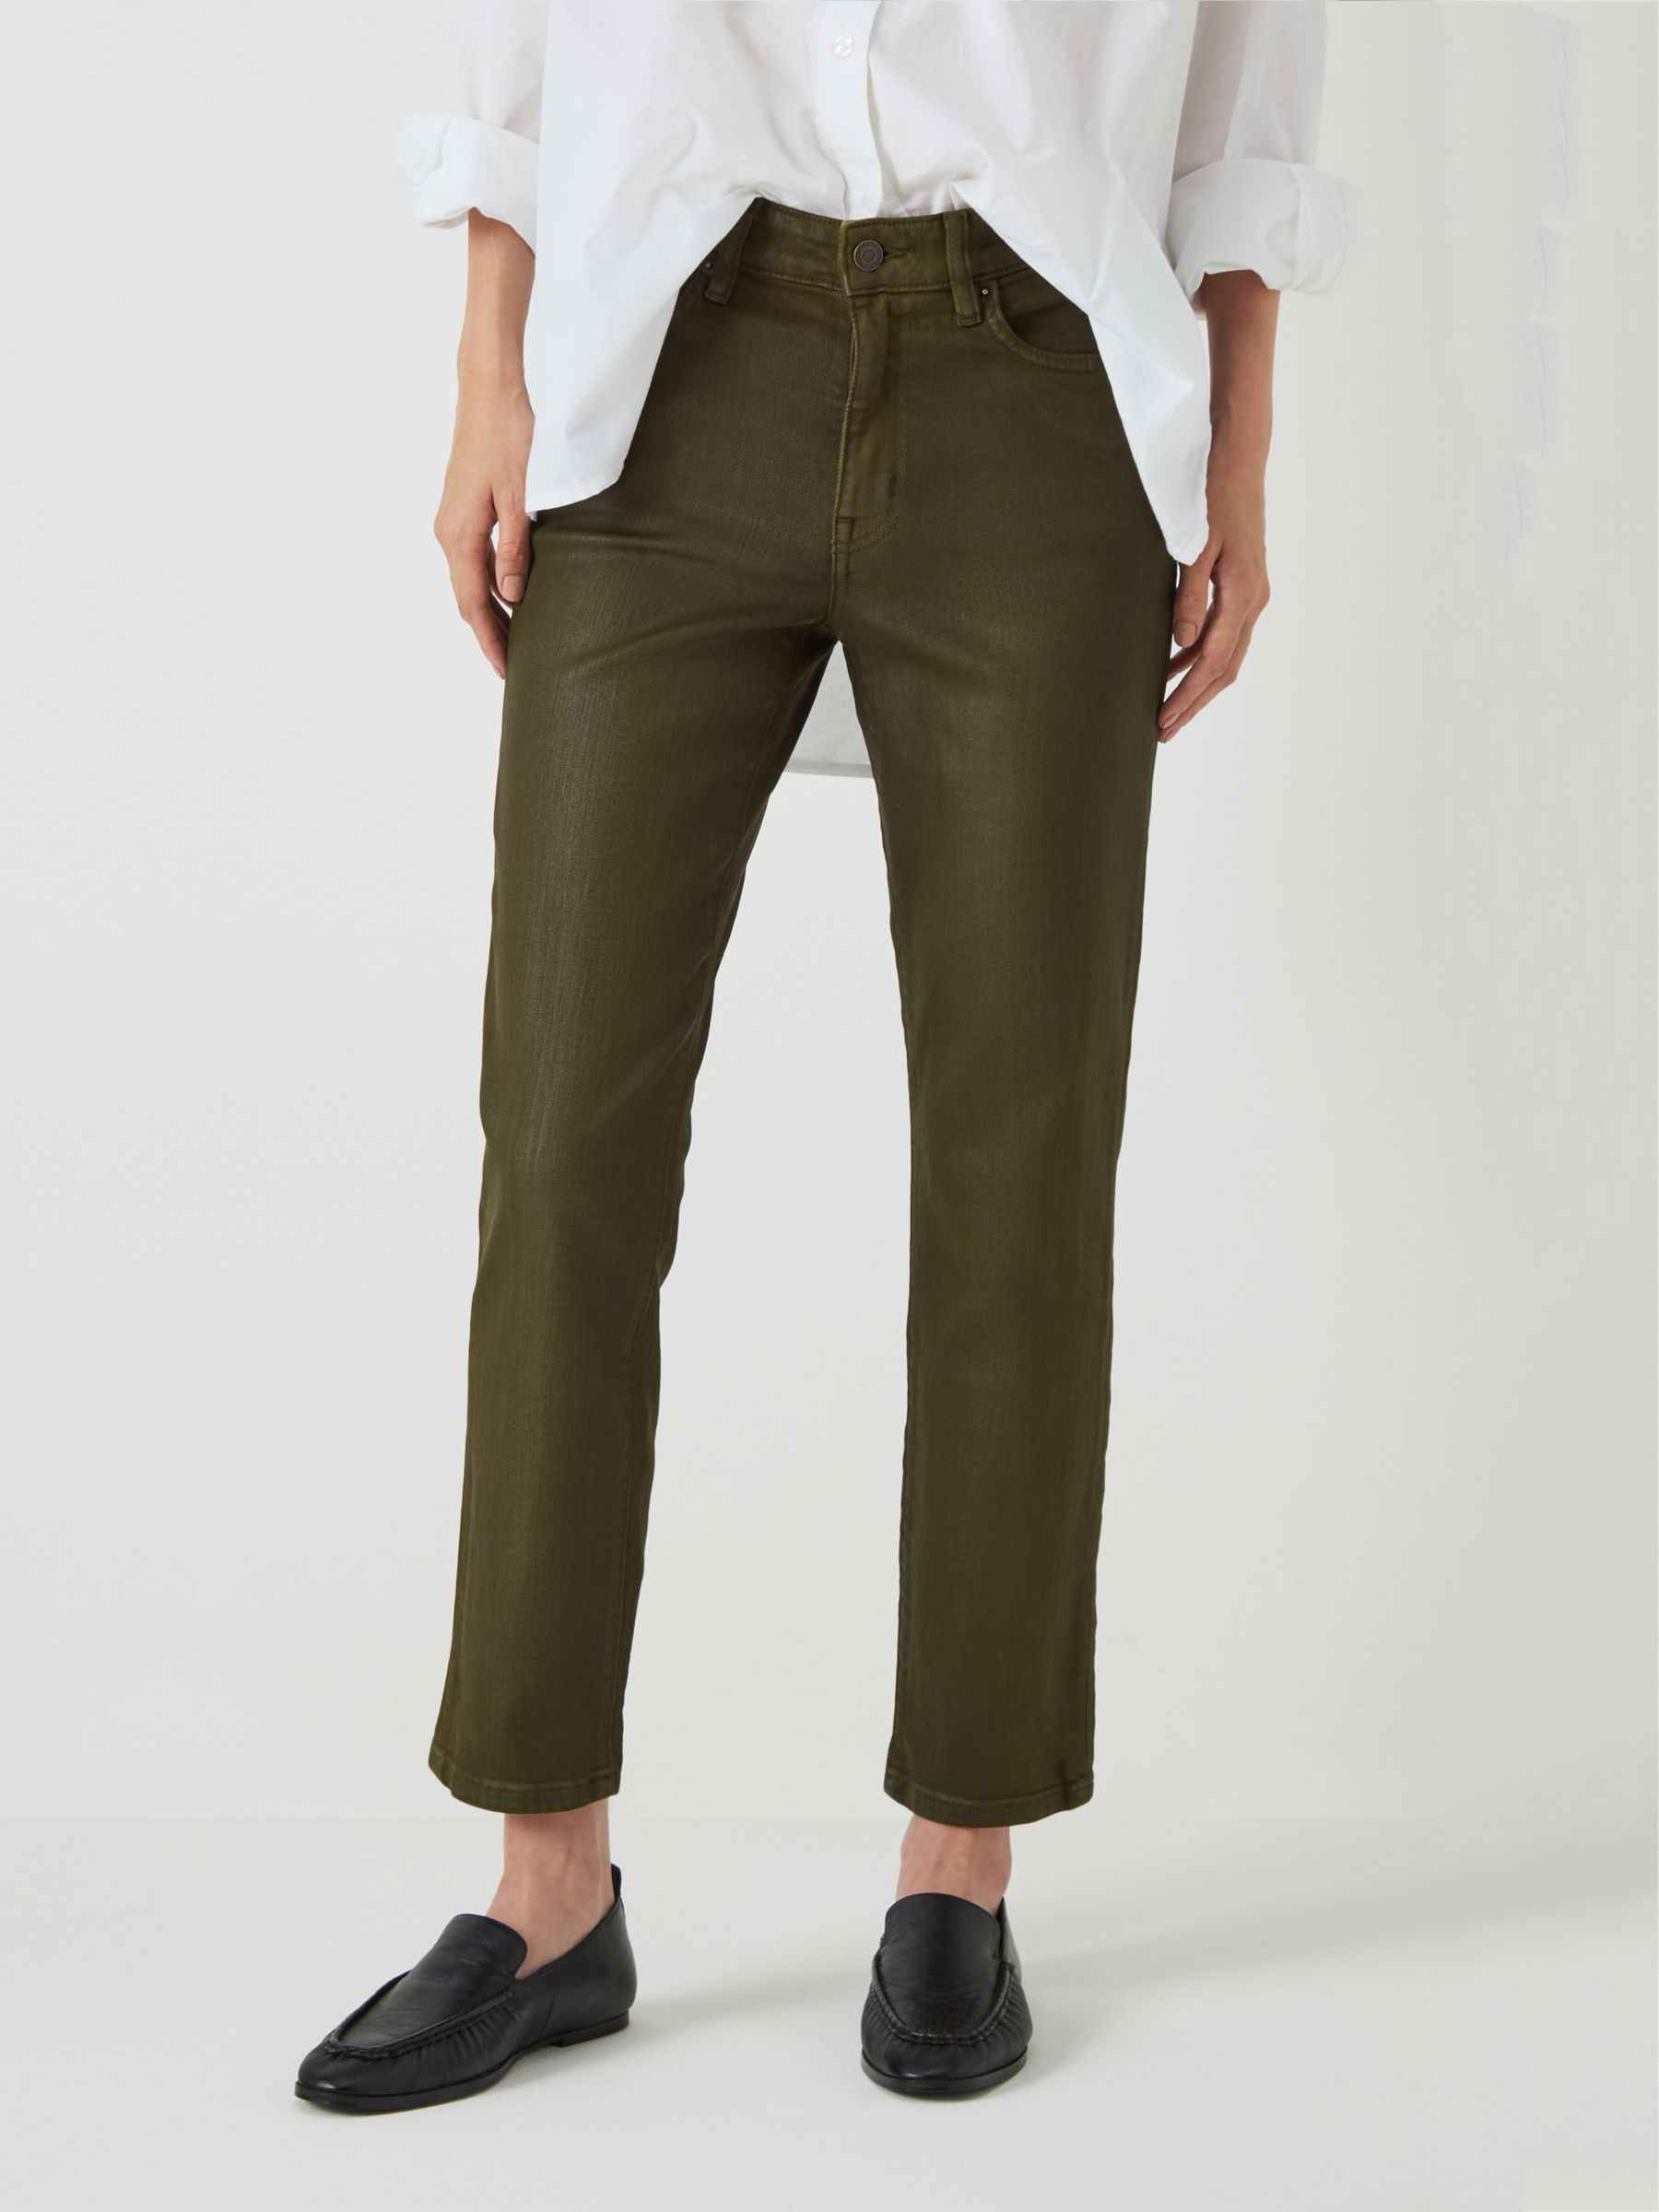 Ralph Lauren, Jeans, Ralph Lauren Lauren Jeans Co Womens Black Straight  Leg Soft Pants Plus Size 4